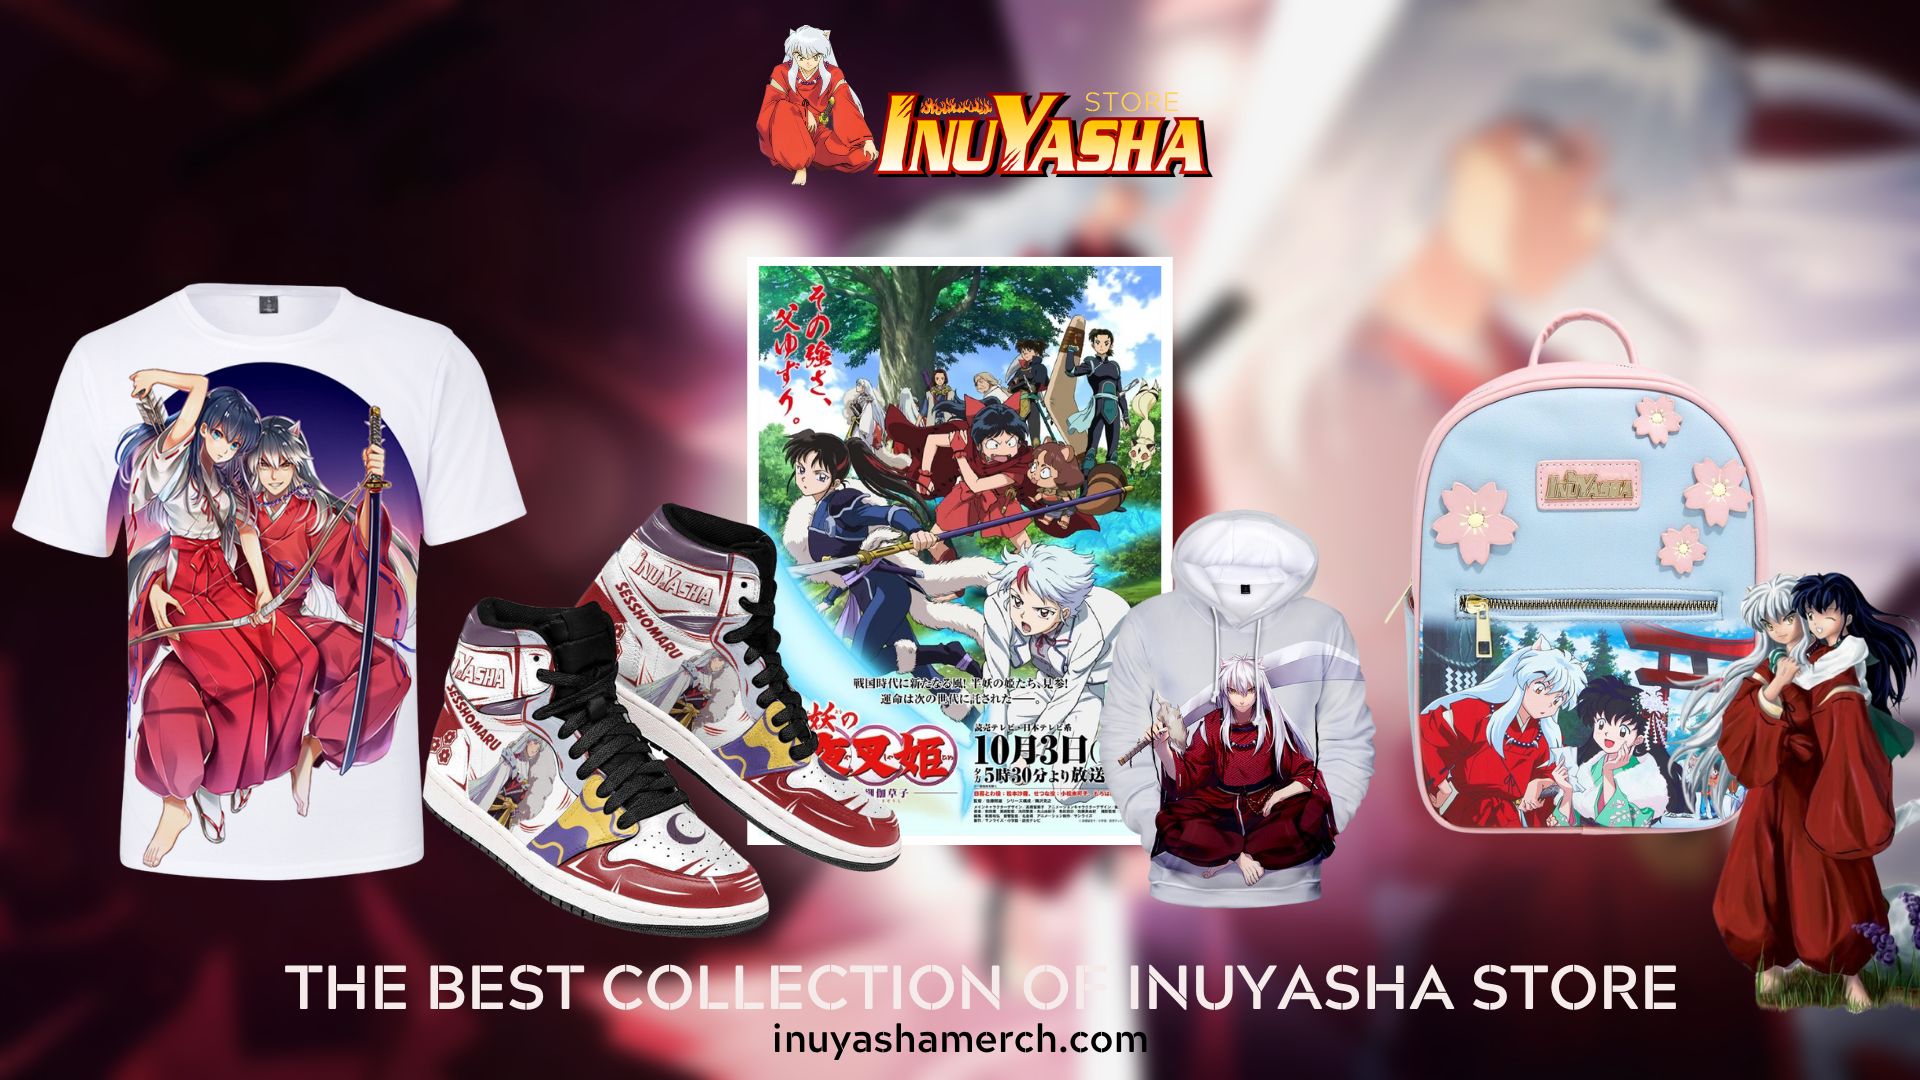 Inuyasha Merch Store Banner 1 - Inuyasha Merch